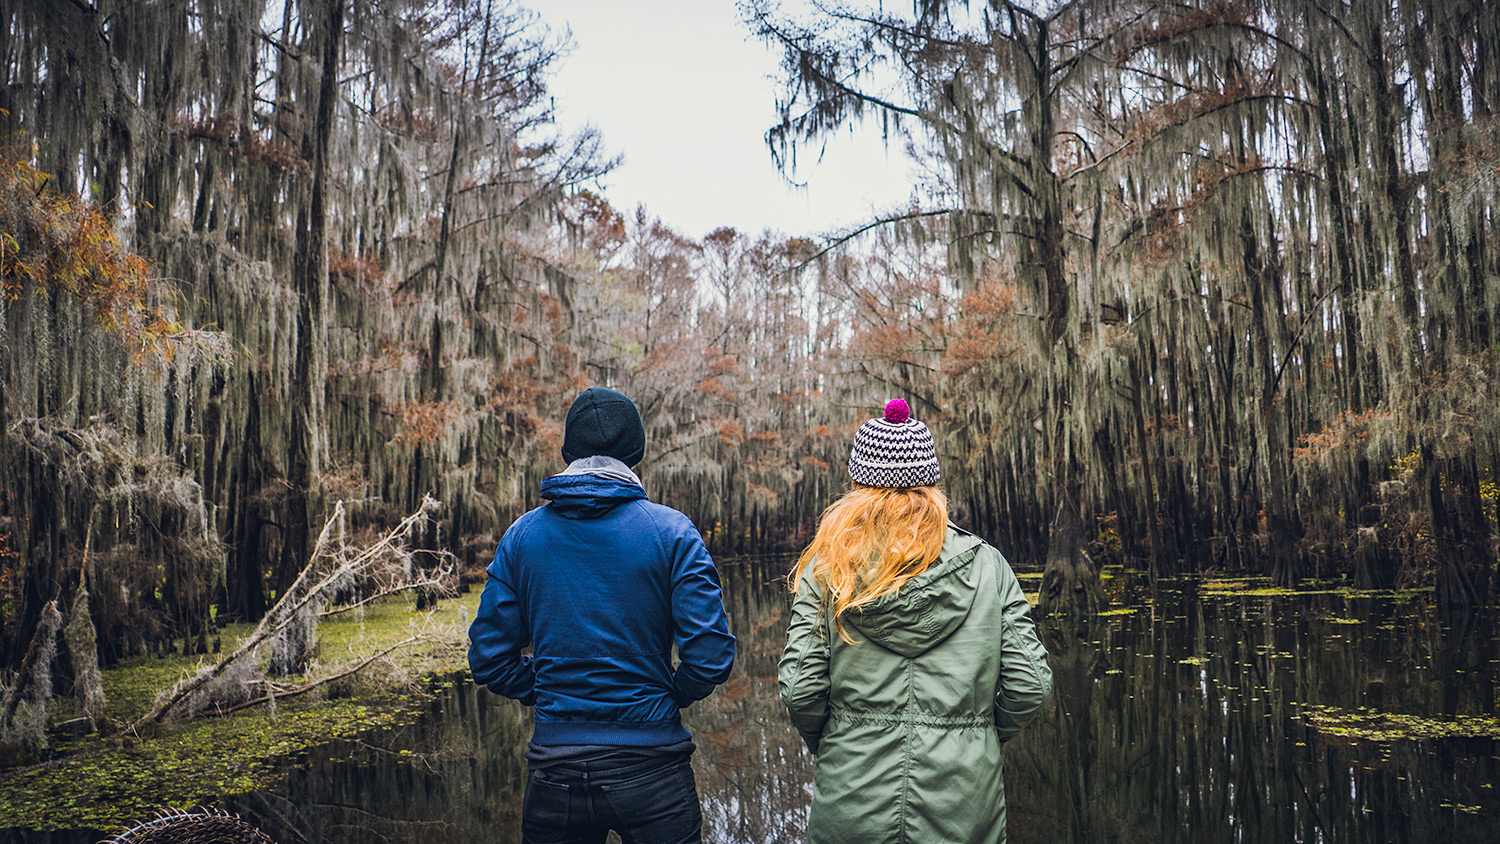 Exploring the Creepiest Swamp Ever! - Travel Vlog